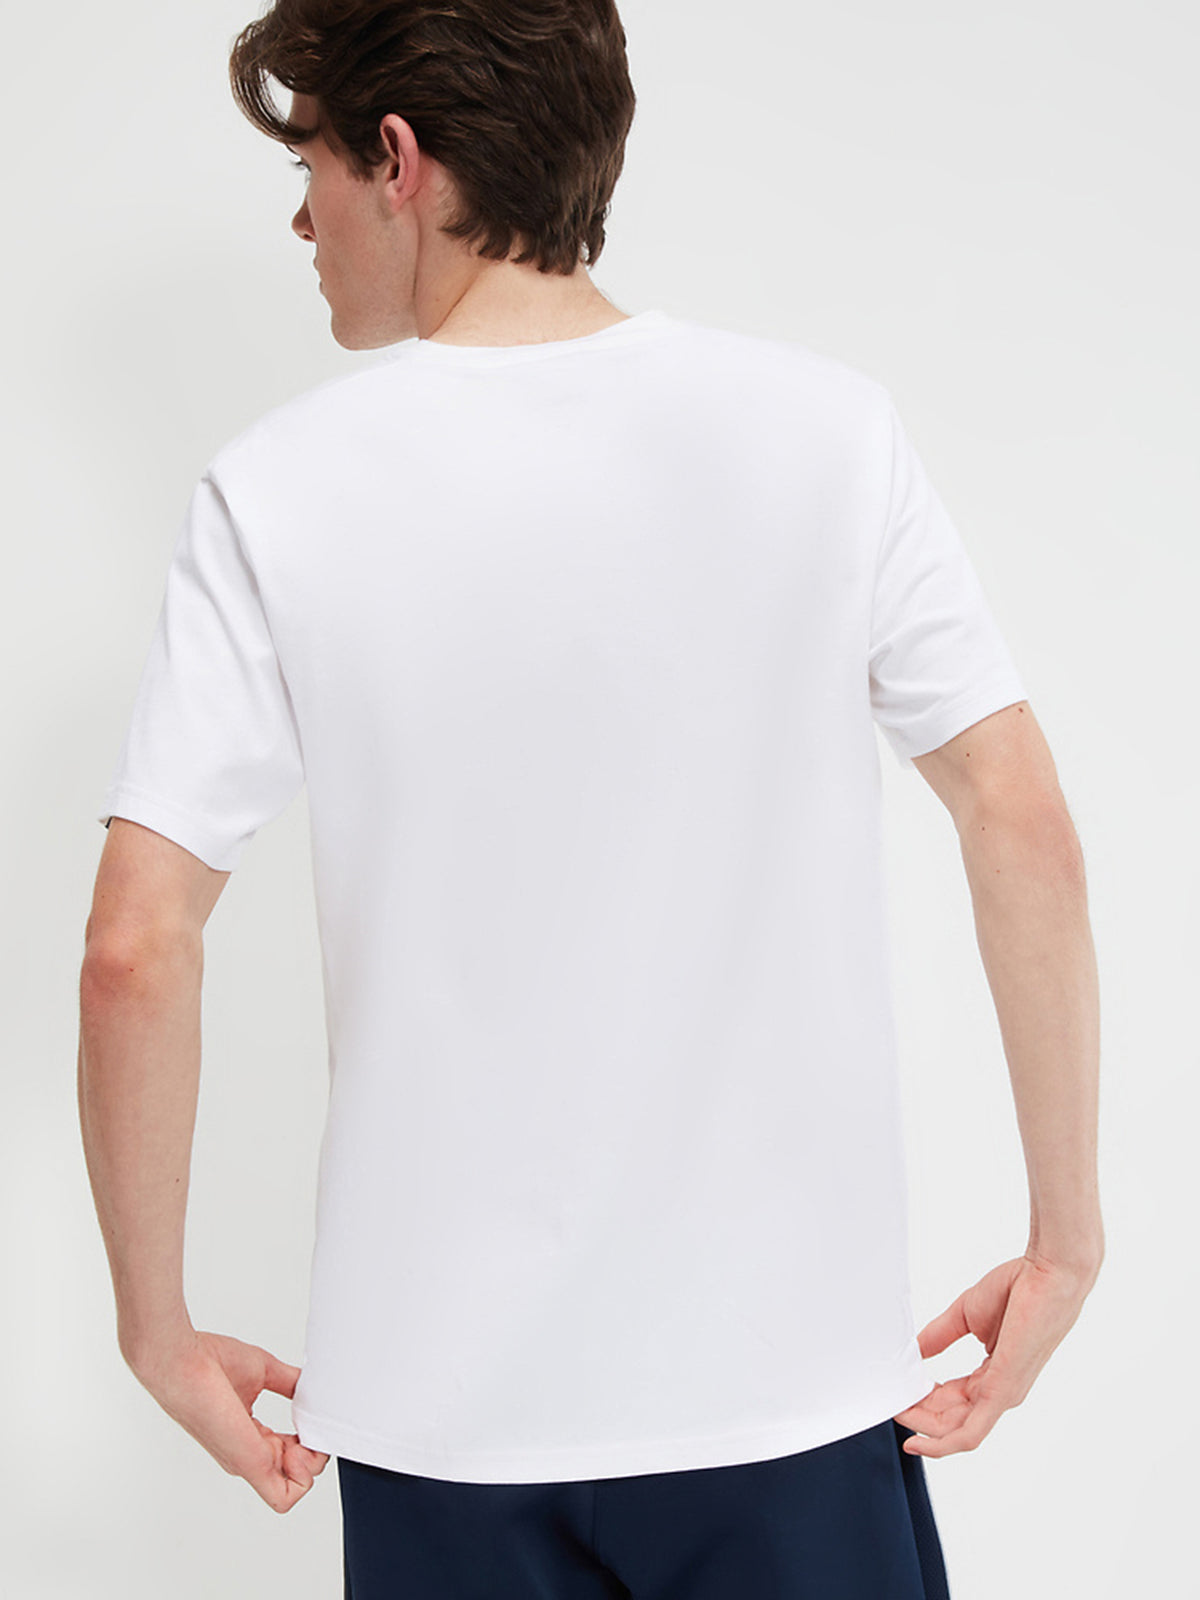 Voodoo Short Sleeve T-Shirt in White